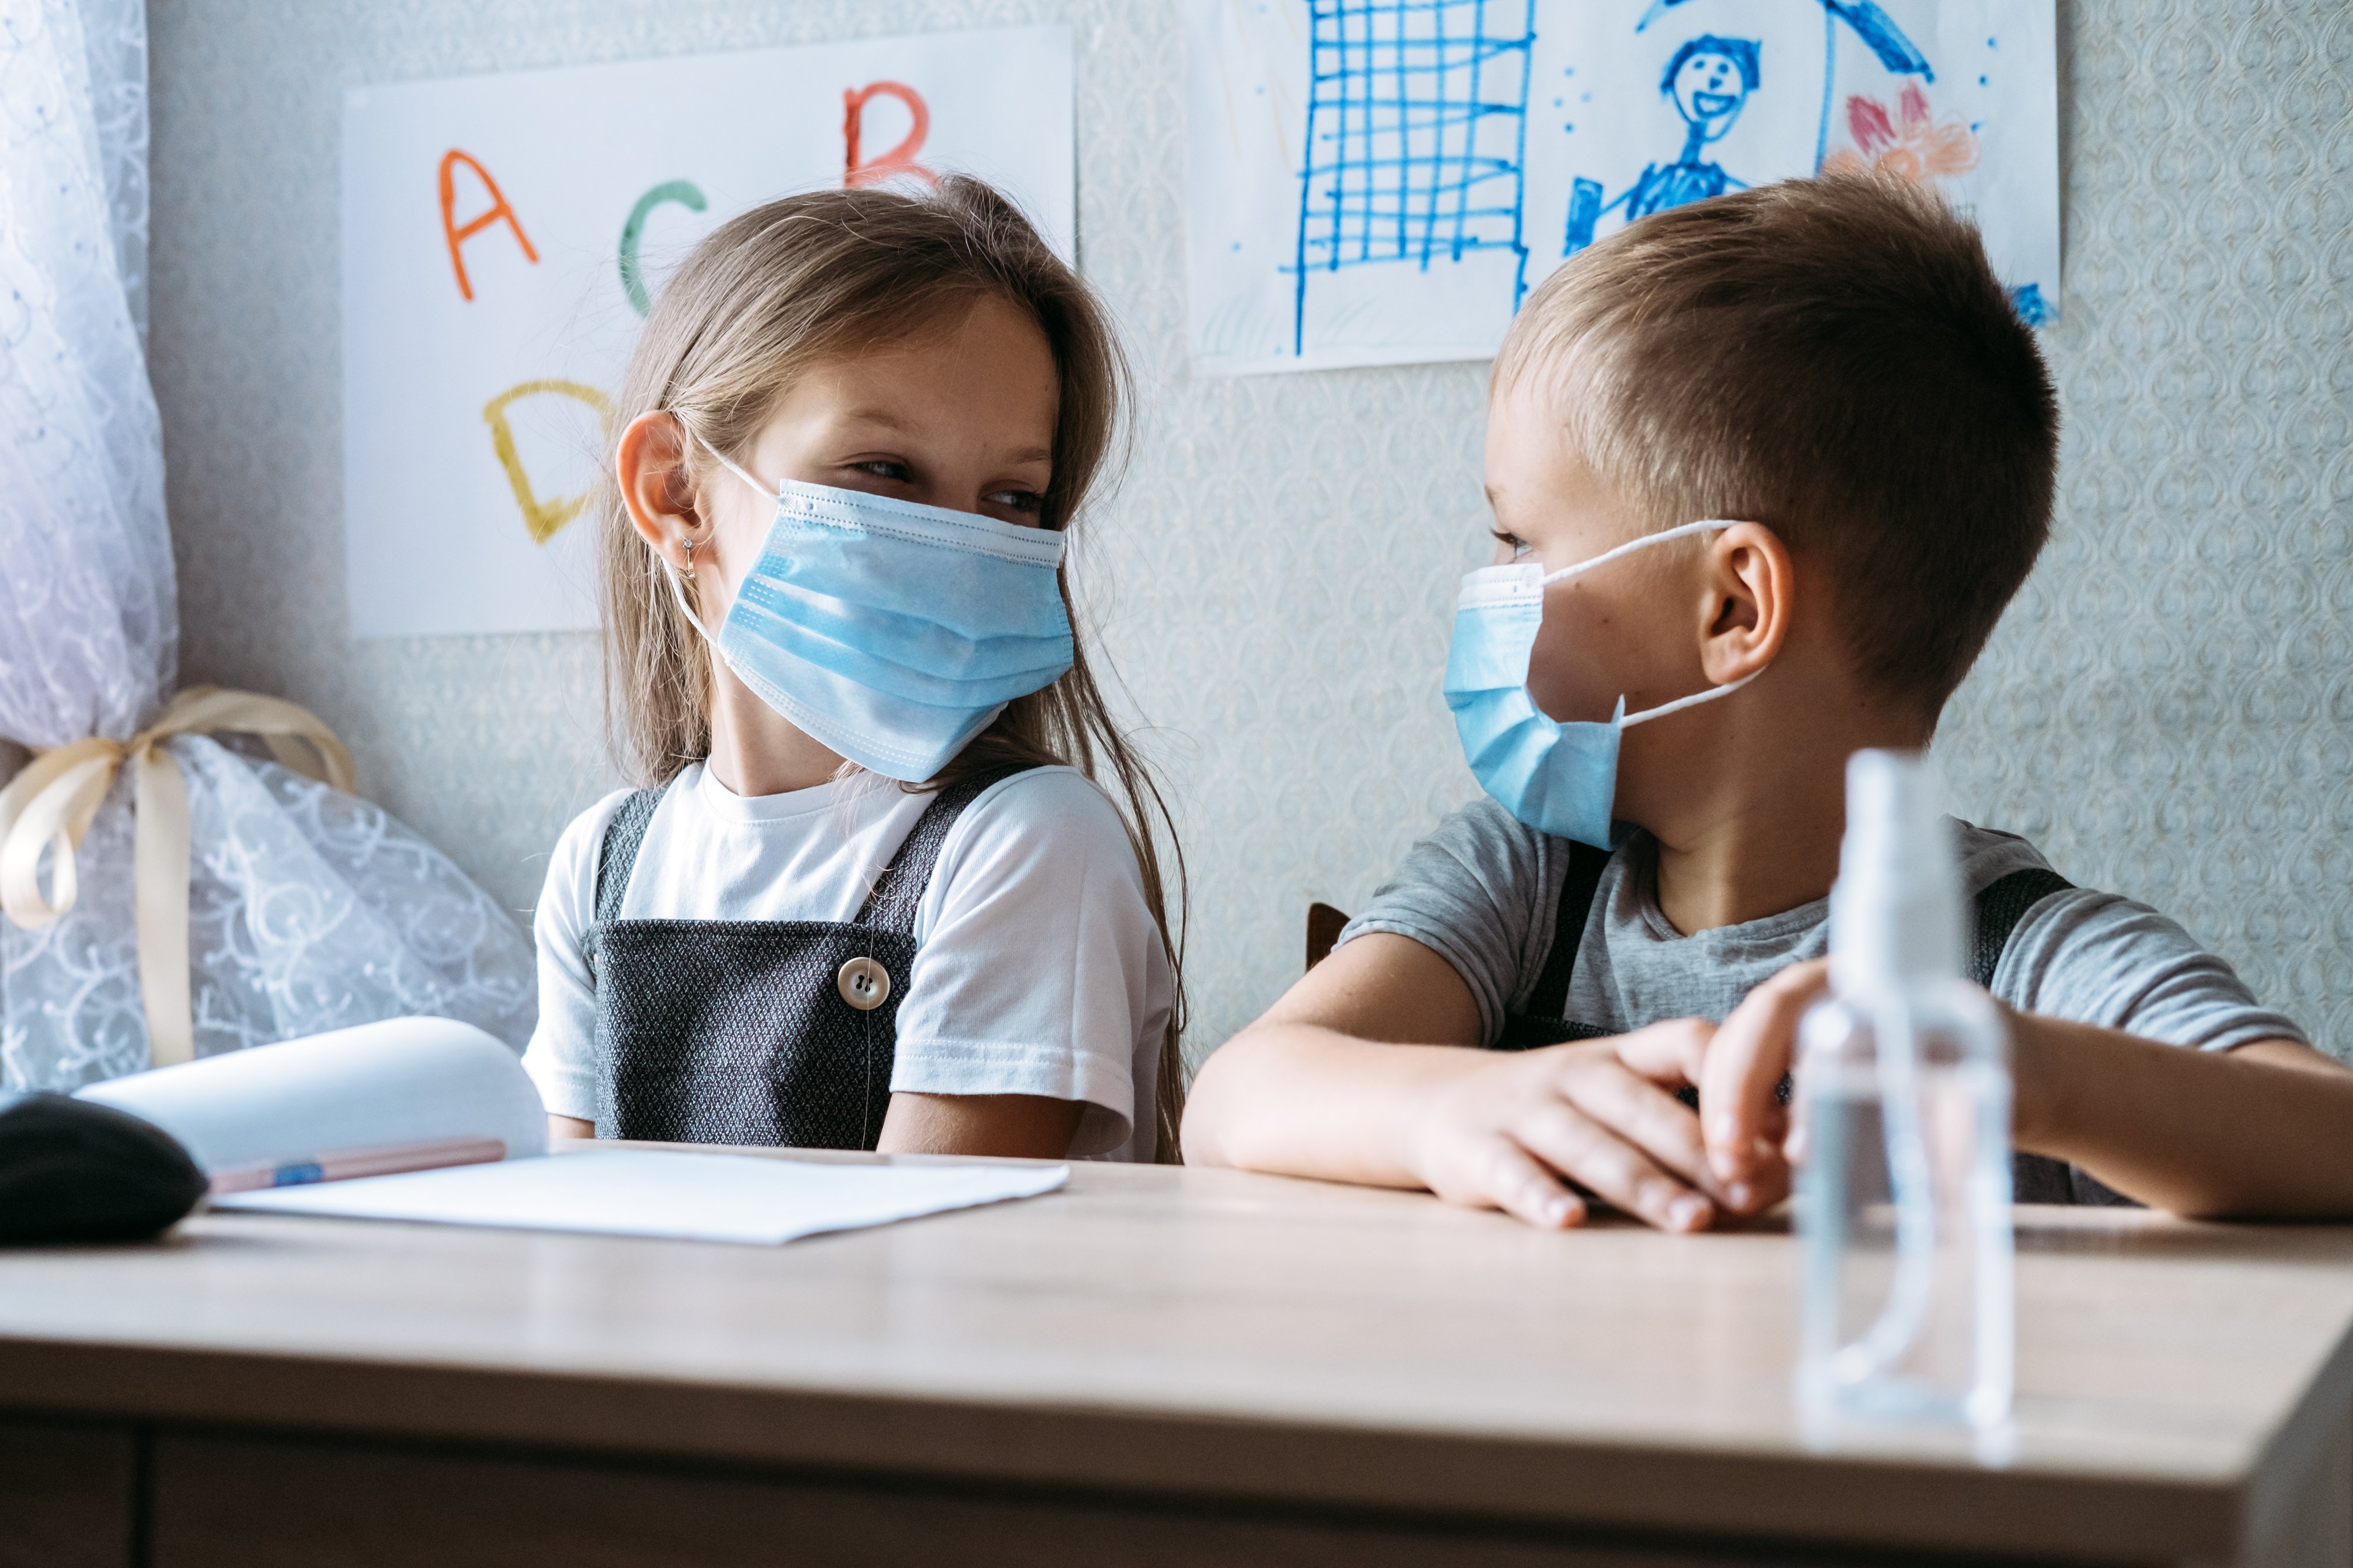 back-school-safety-schoolkids-wearing-masks-using-antiseptic-classroom-school-hildren